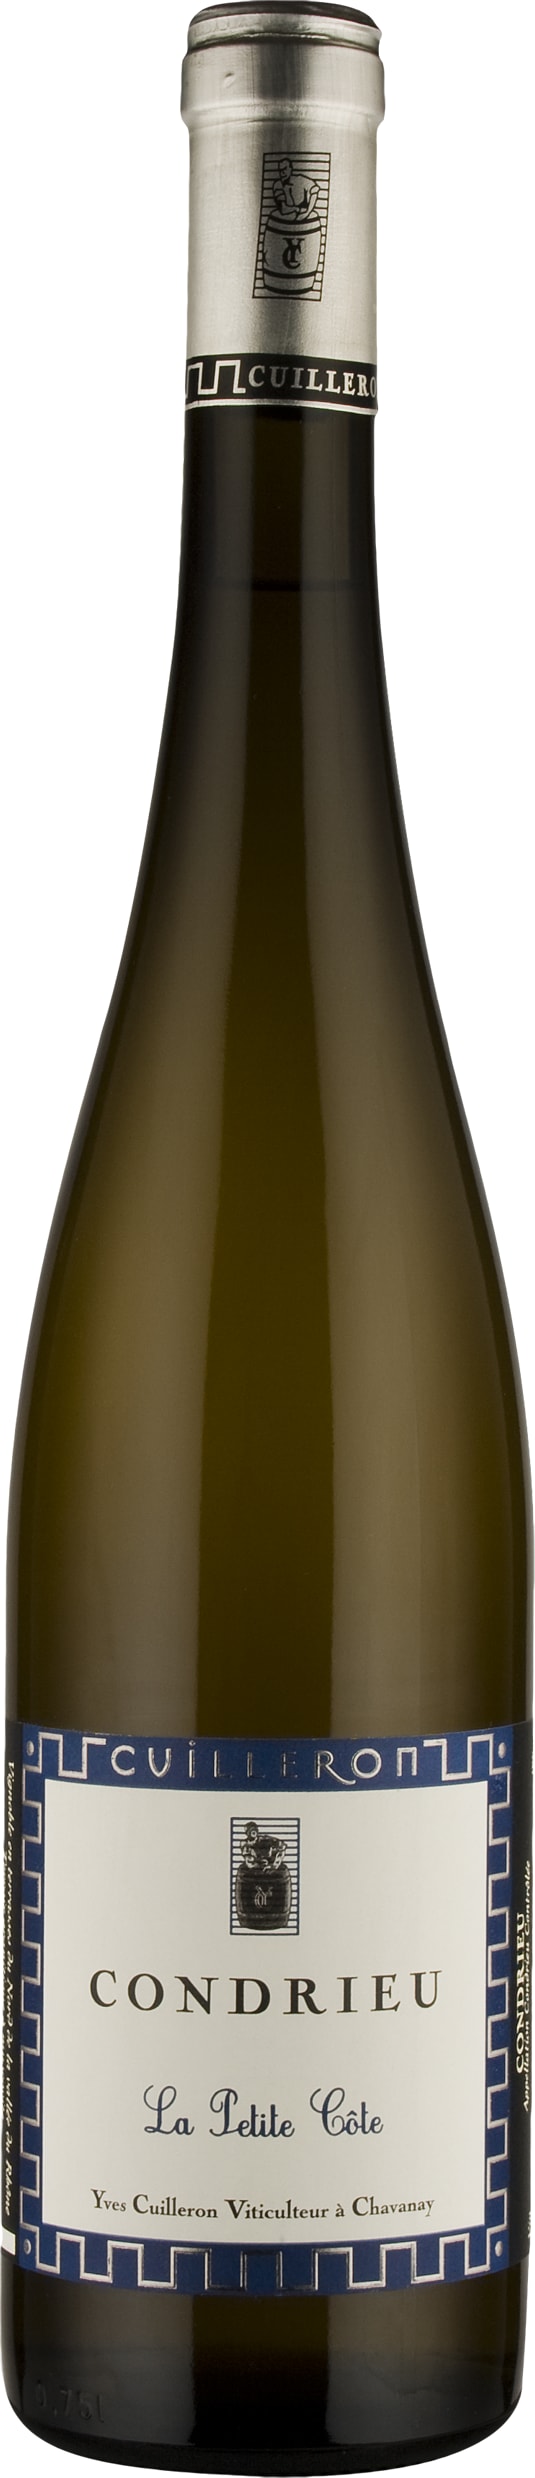 Yves Cuilleron Condrieu La Petite Cote 2022 75cl - Buy Yves Cuilleron Wines from GREAT WINES DIRECT wine shop